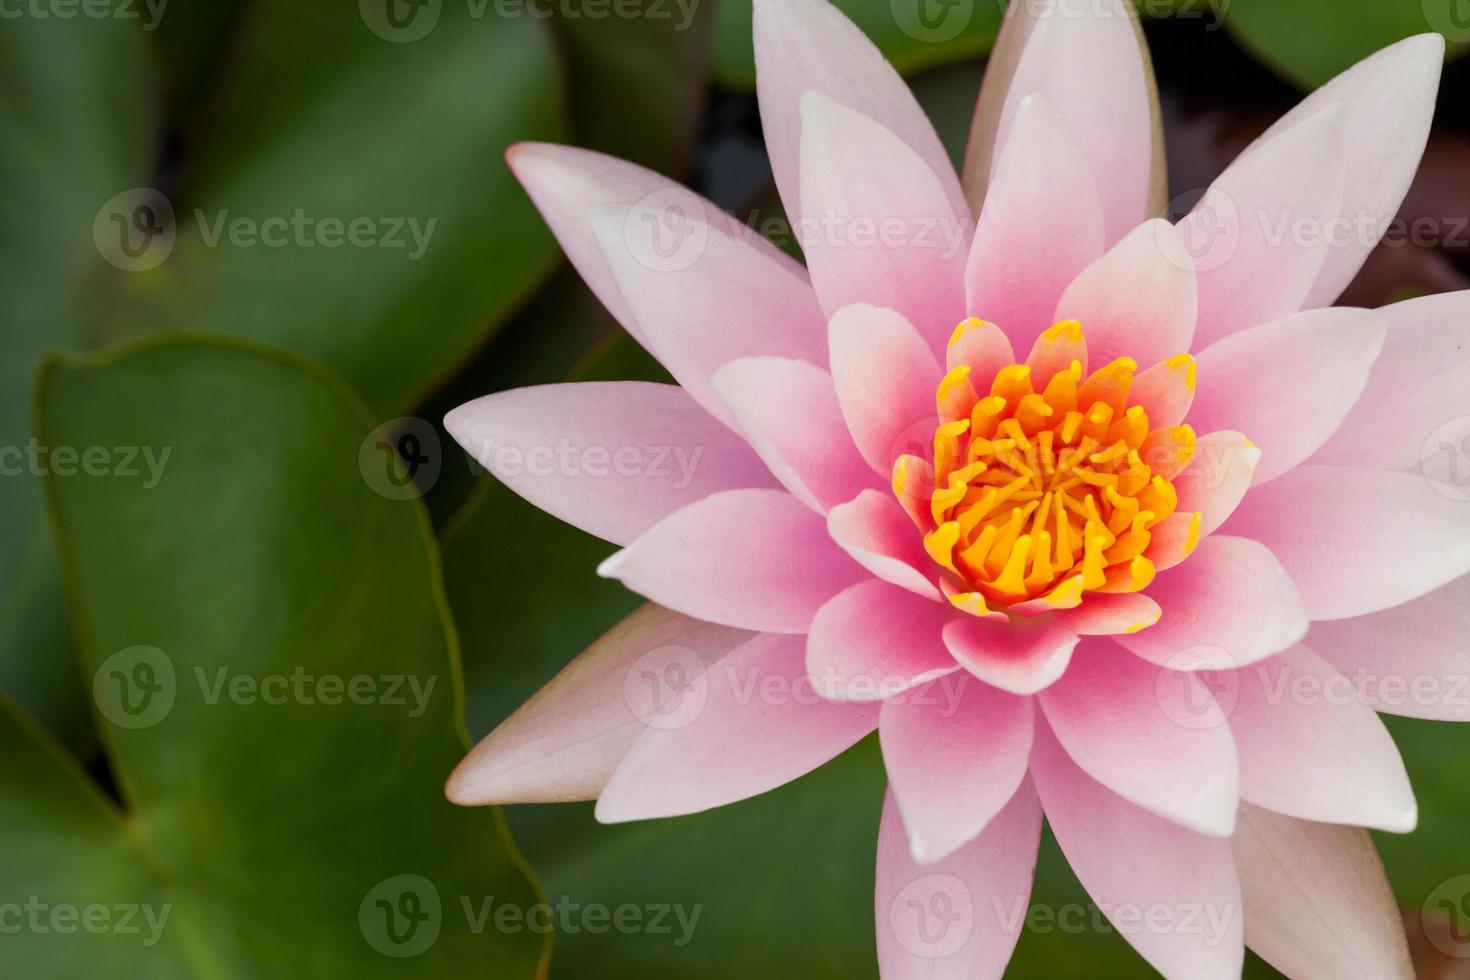 rosa lotusblomma natur bakgrund foto